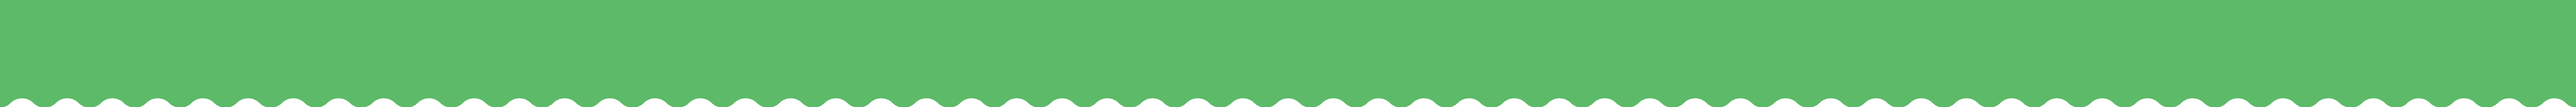 wavygreen